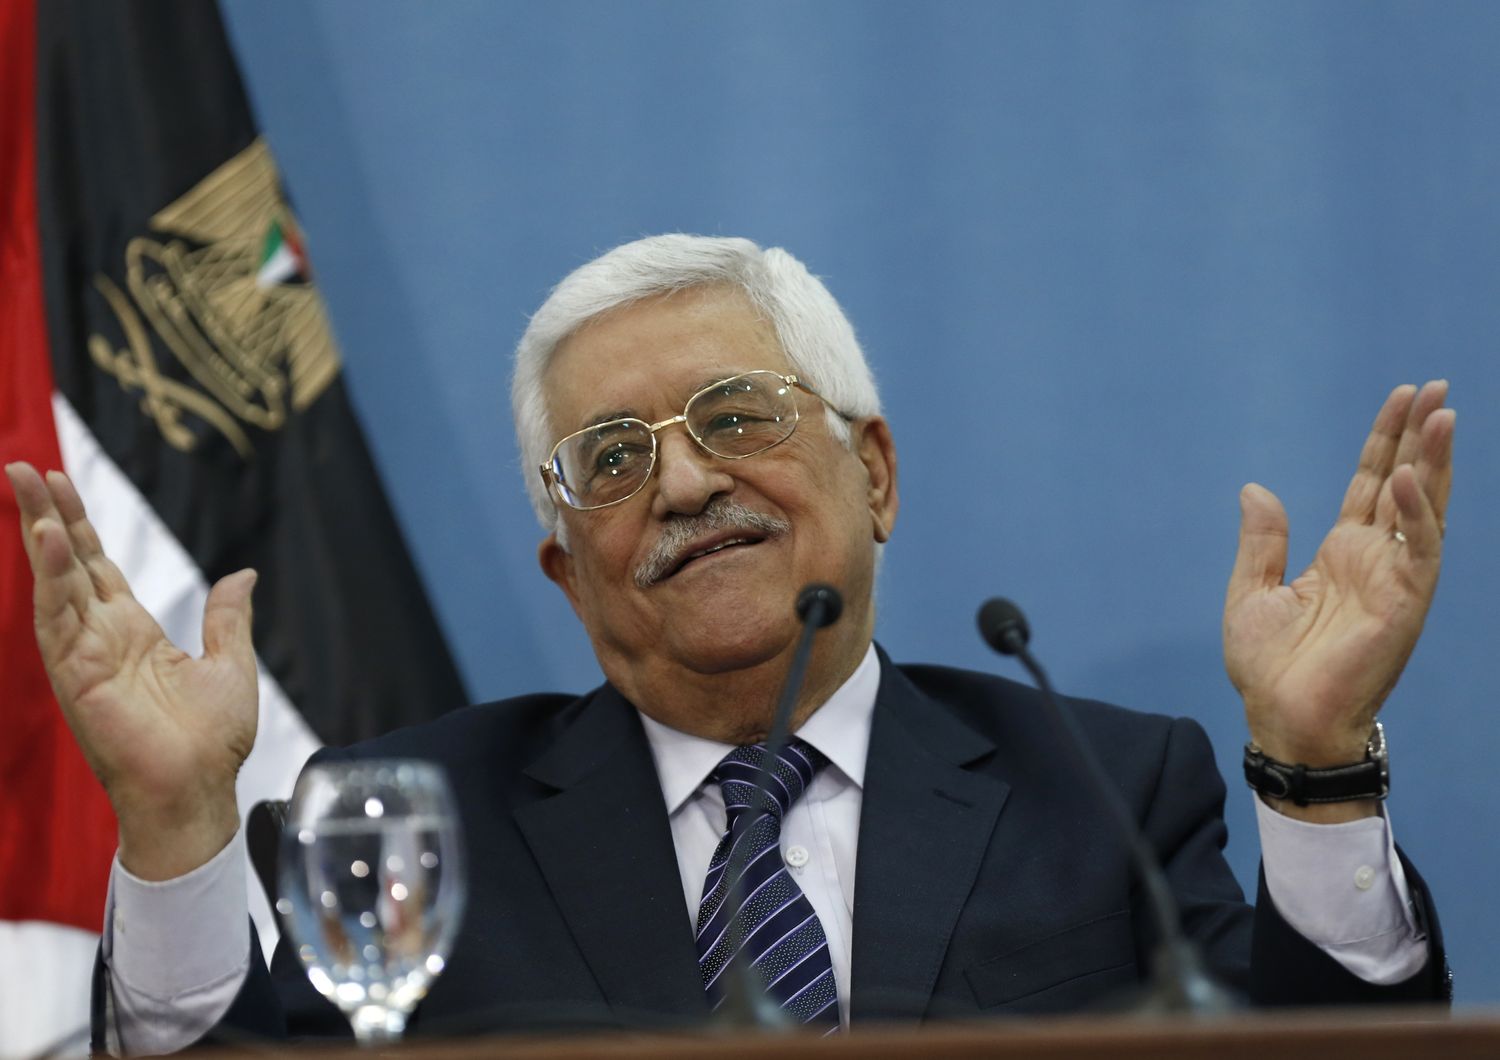 Abu Mazen presidente Anp Cisgiordania (afp)